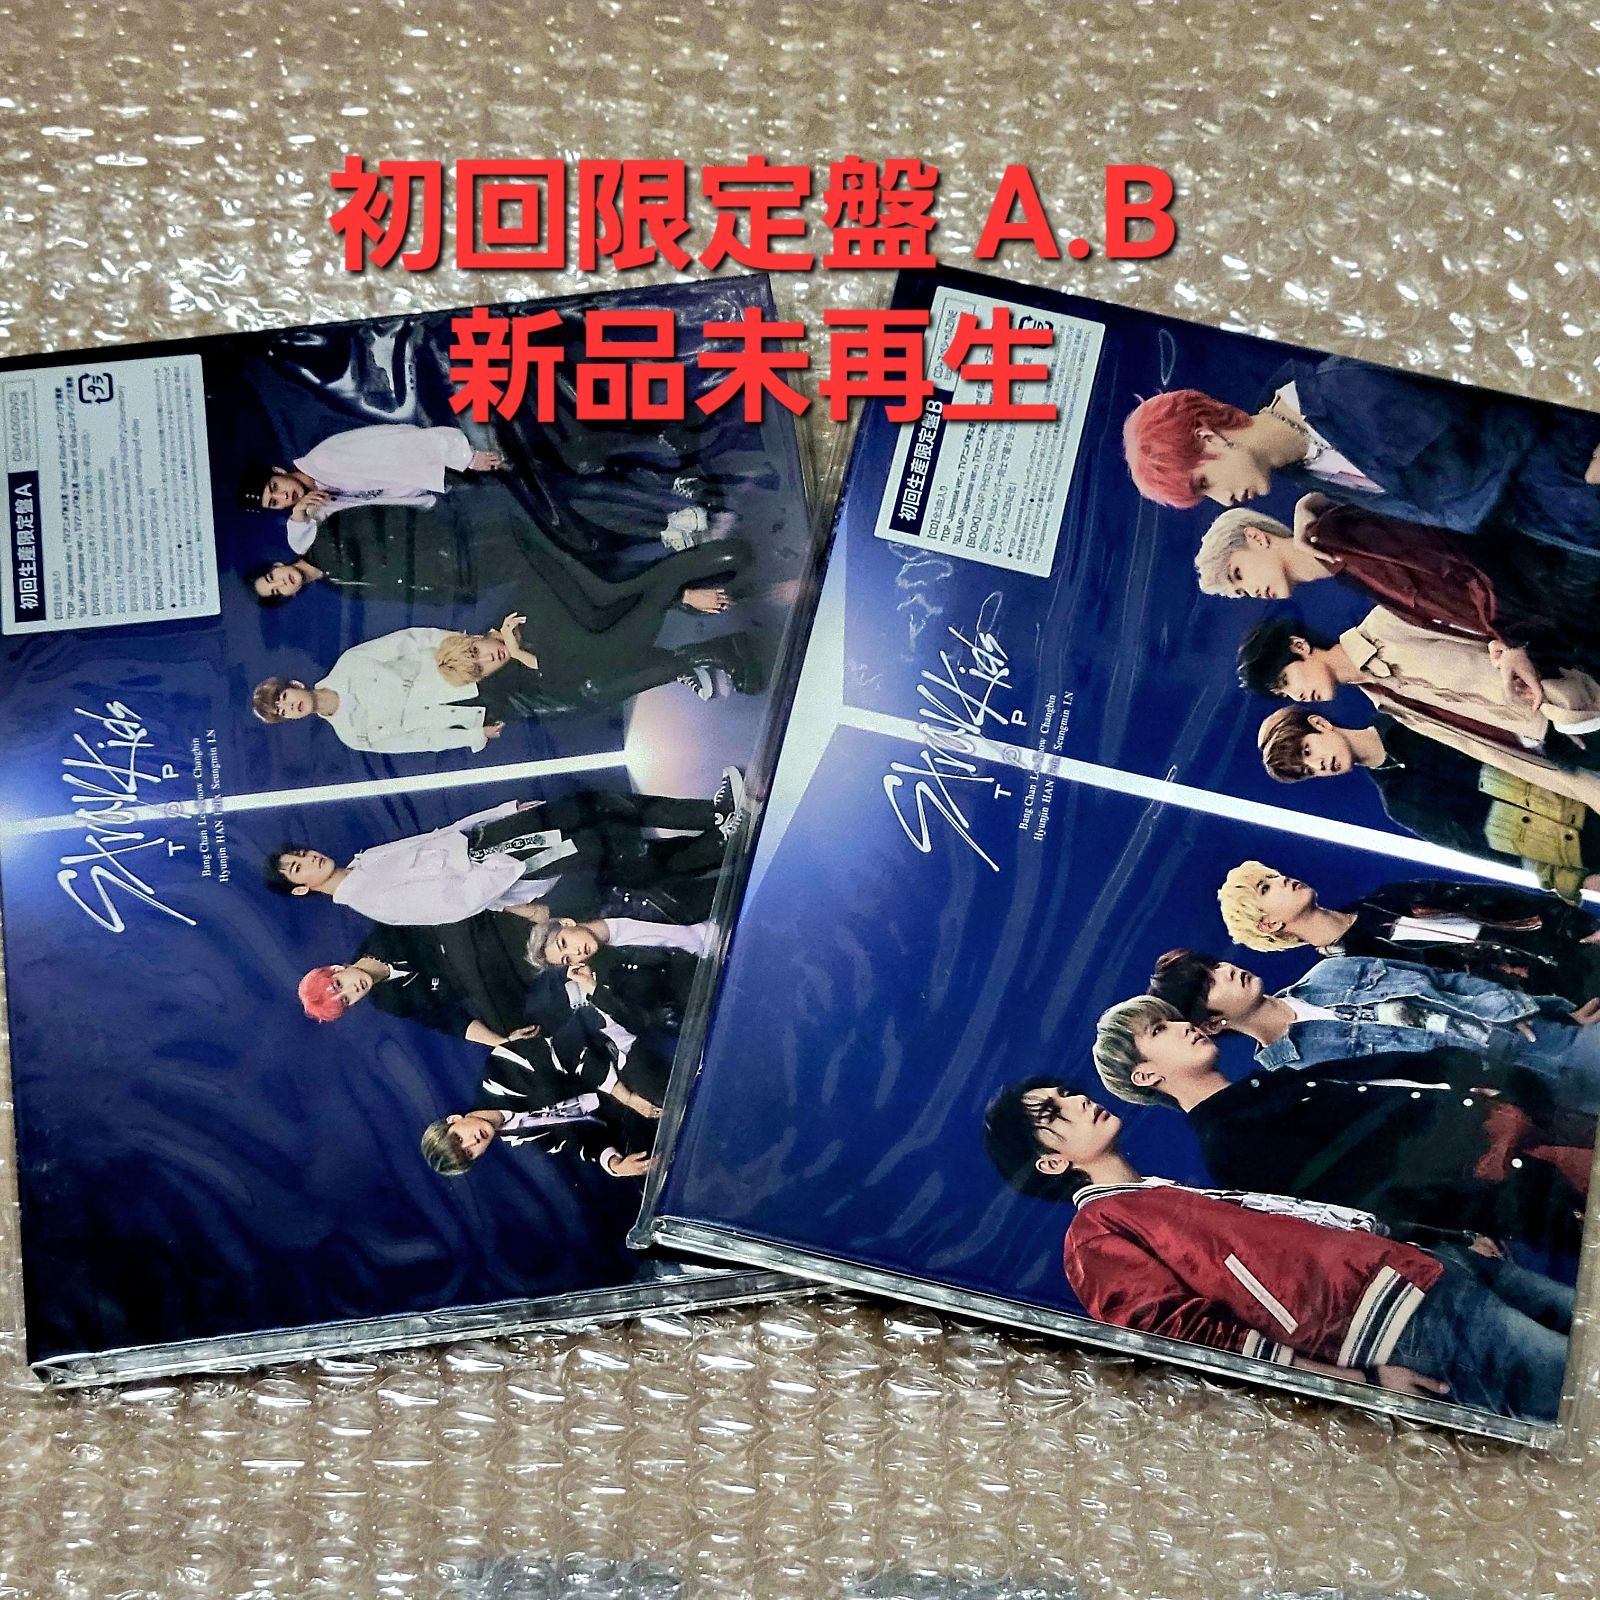 straykids 公式 TOP 初回限定盤 A.B CD DVD フォトブック 新品未再生